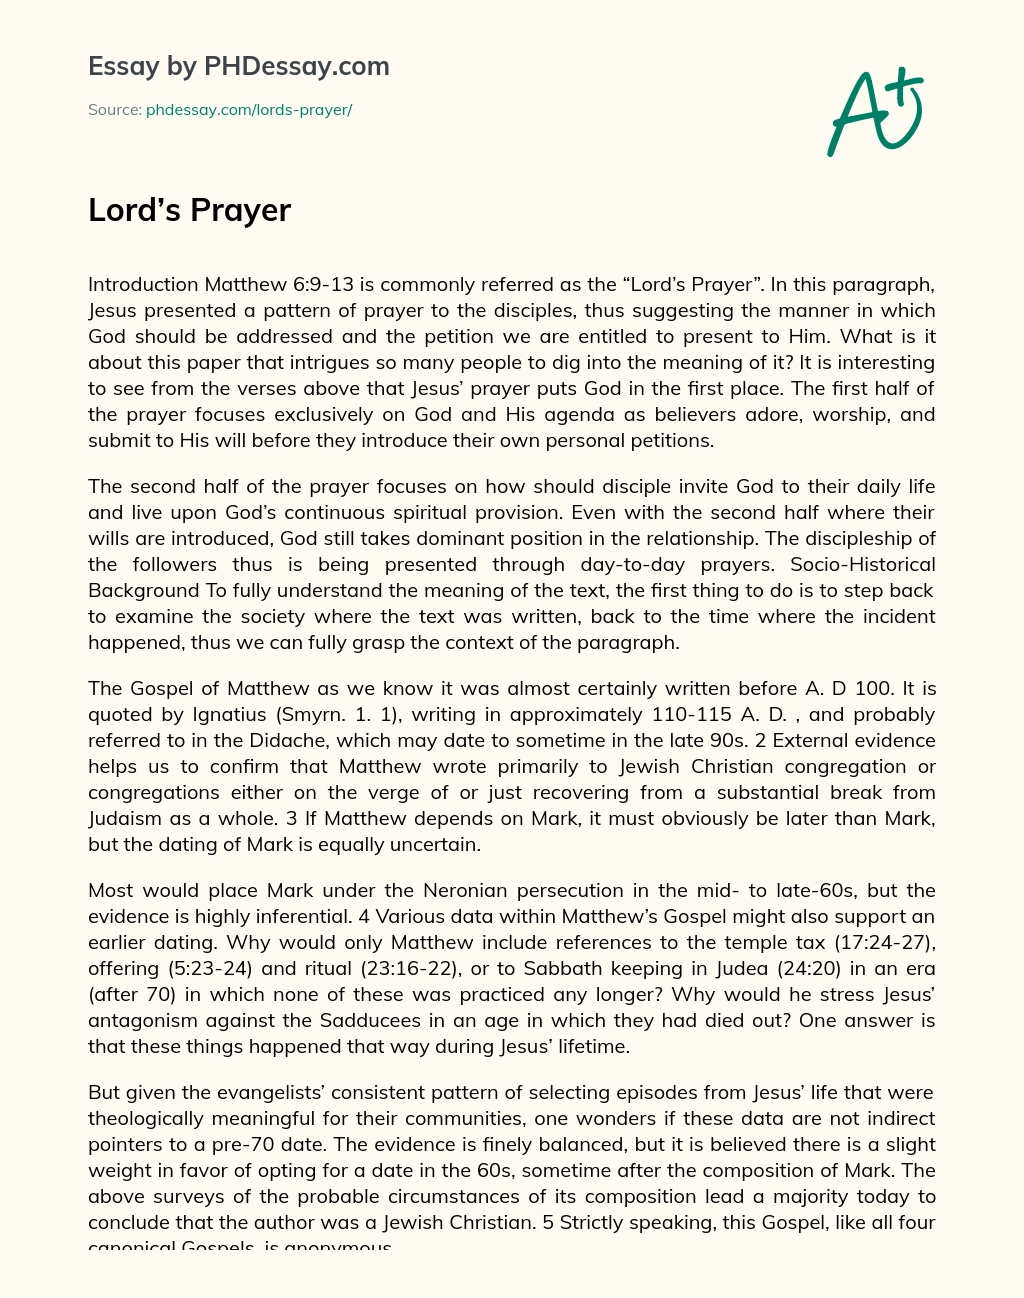 Lord’s Prayer essay